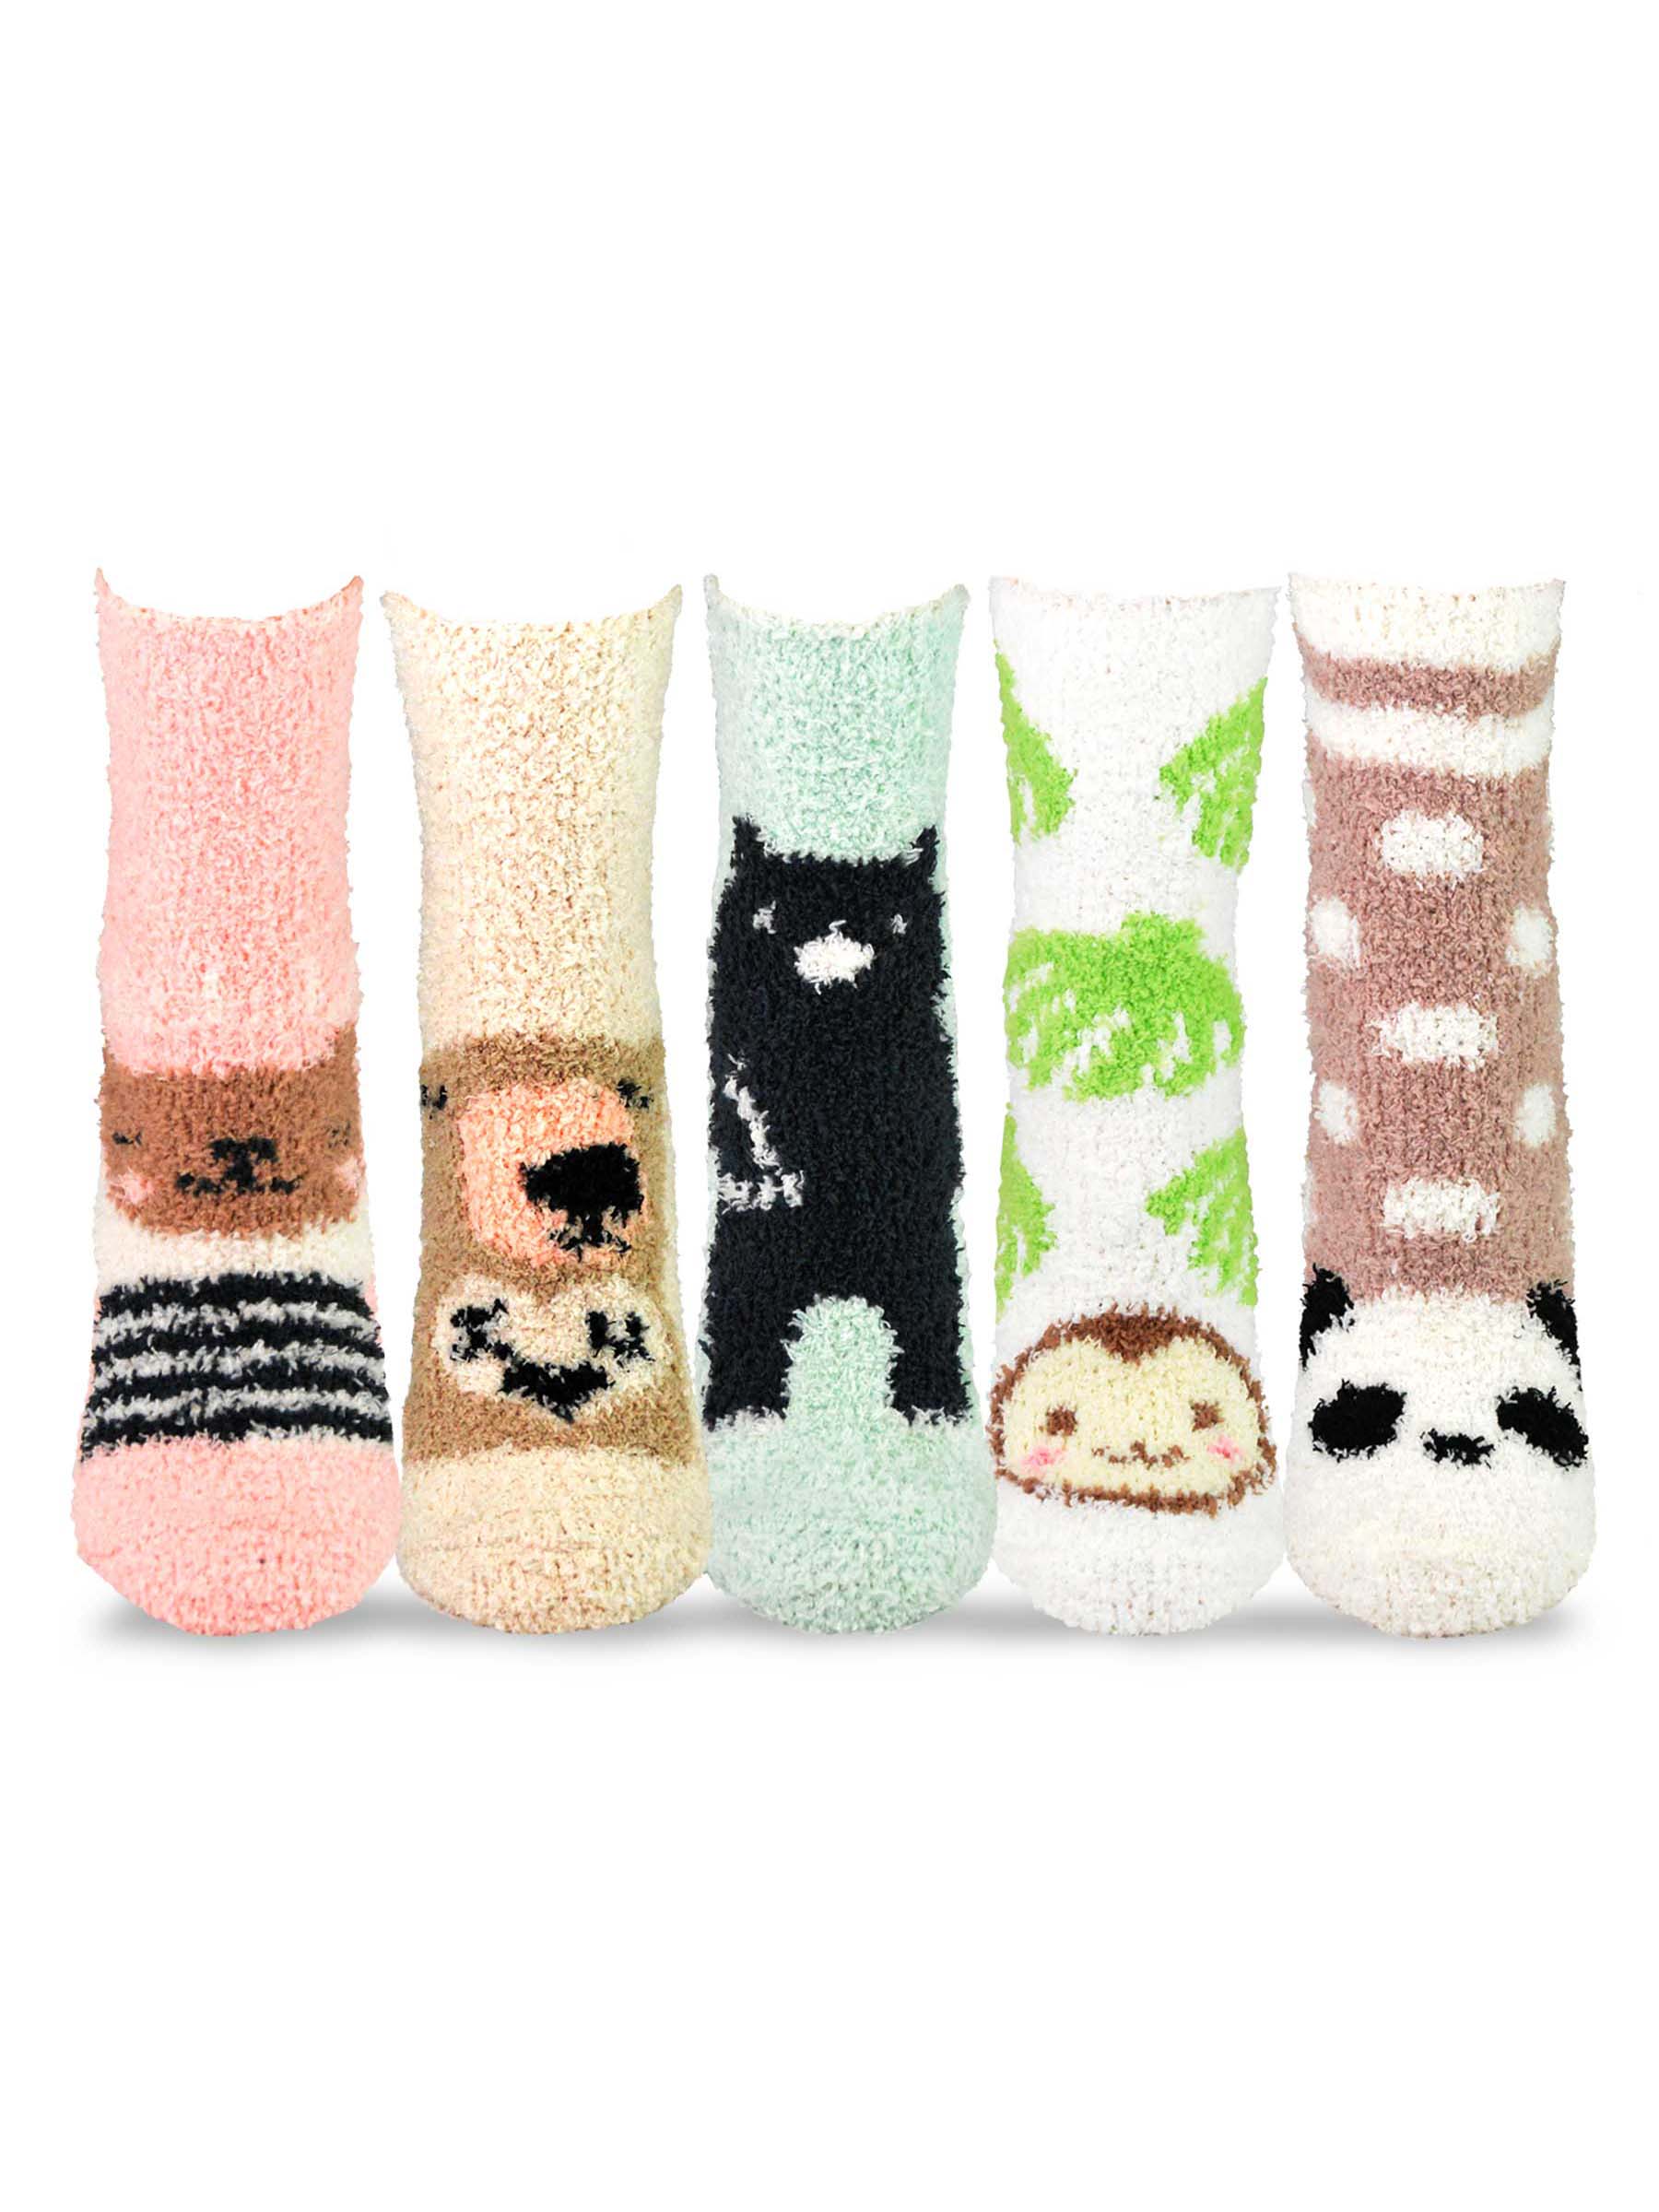 TeeHee Fashionable Cozy Fuzzy Slipper Crew Socks for Women 5-Pack - image 2 of 8